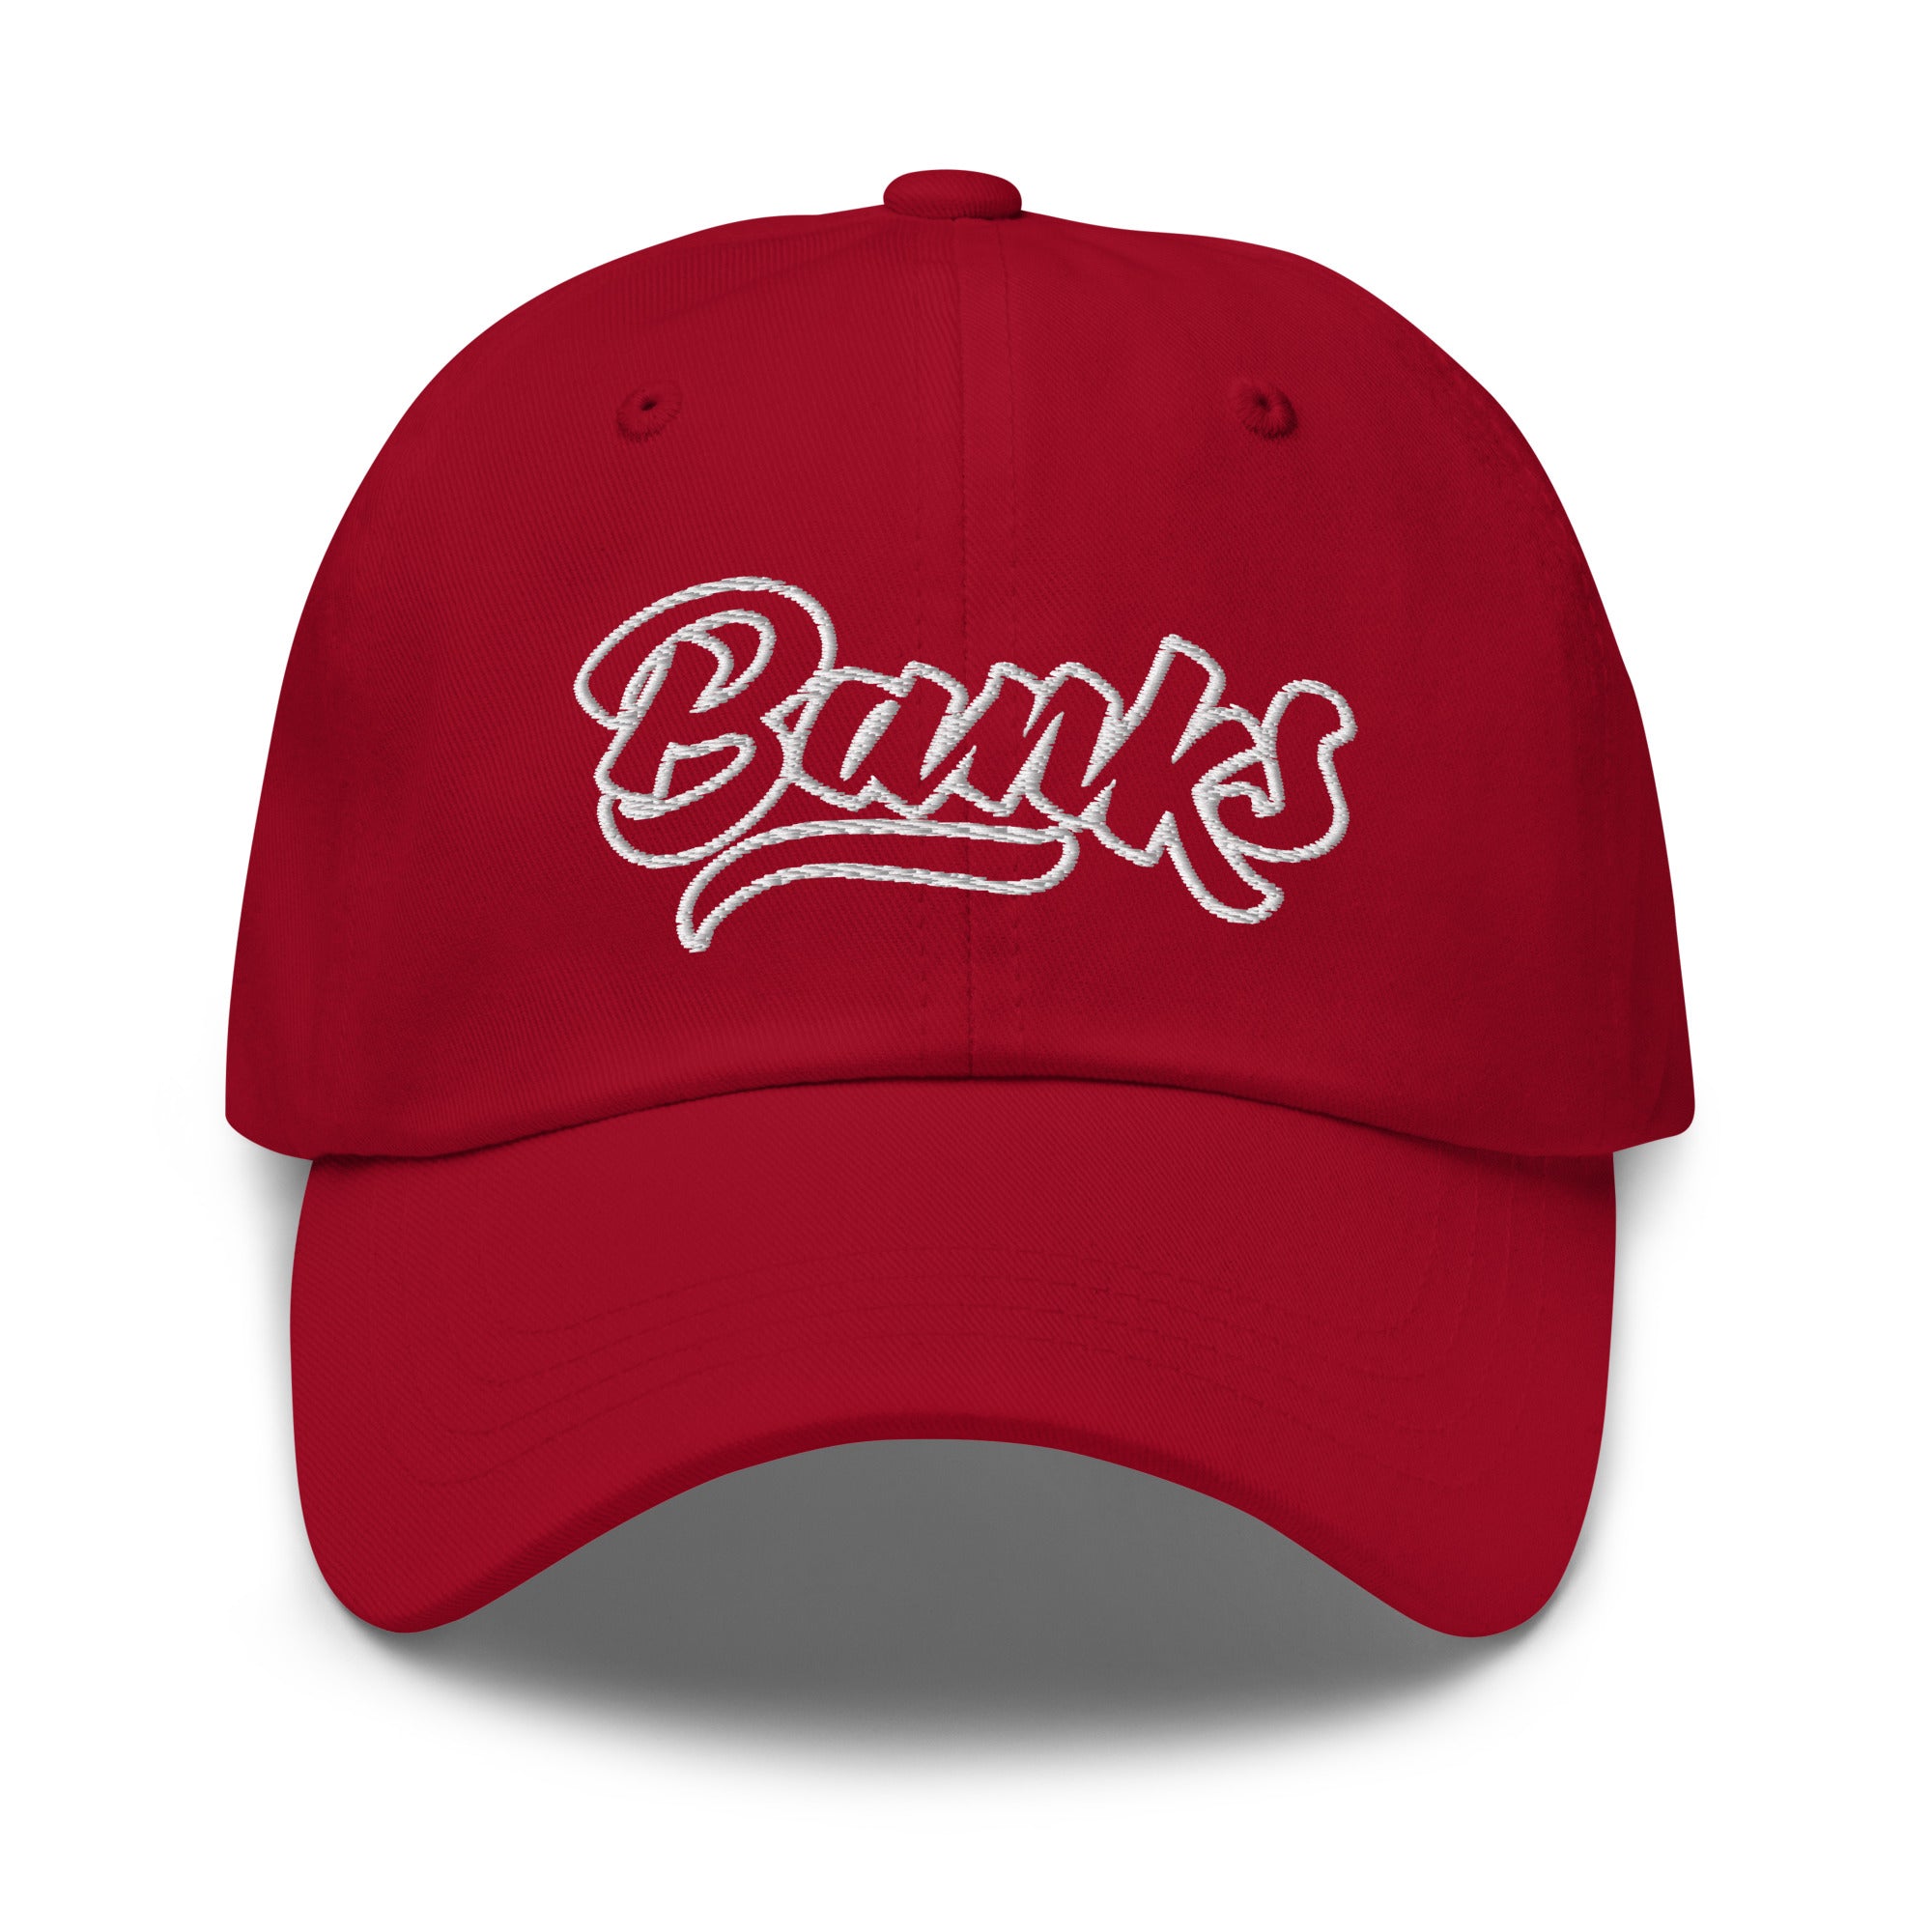 Banks 1433 - Dad hat